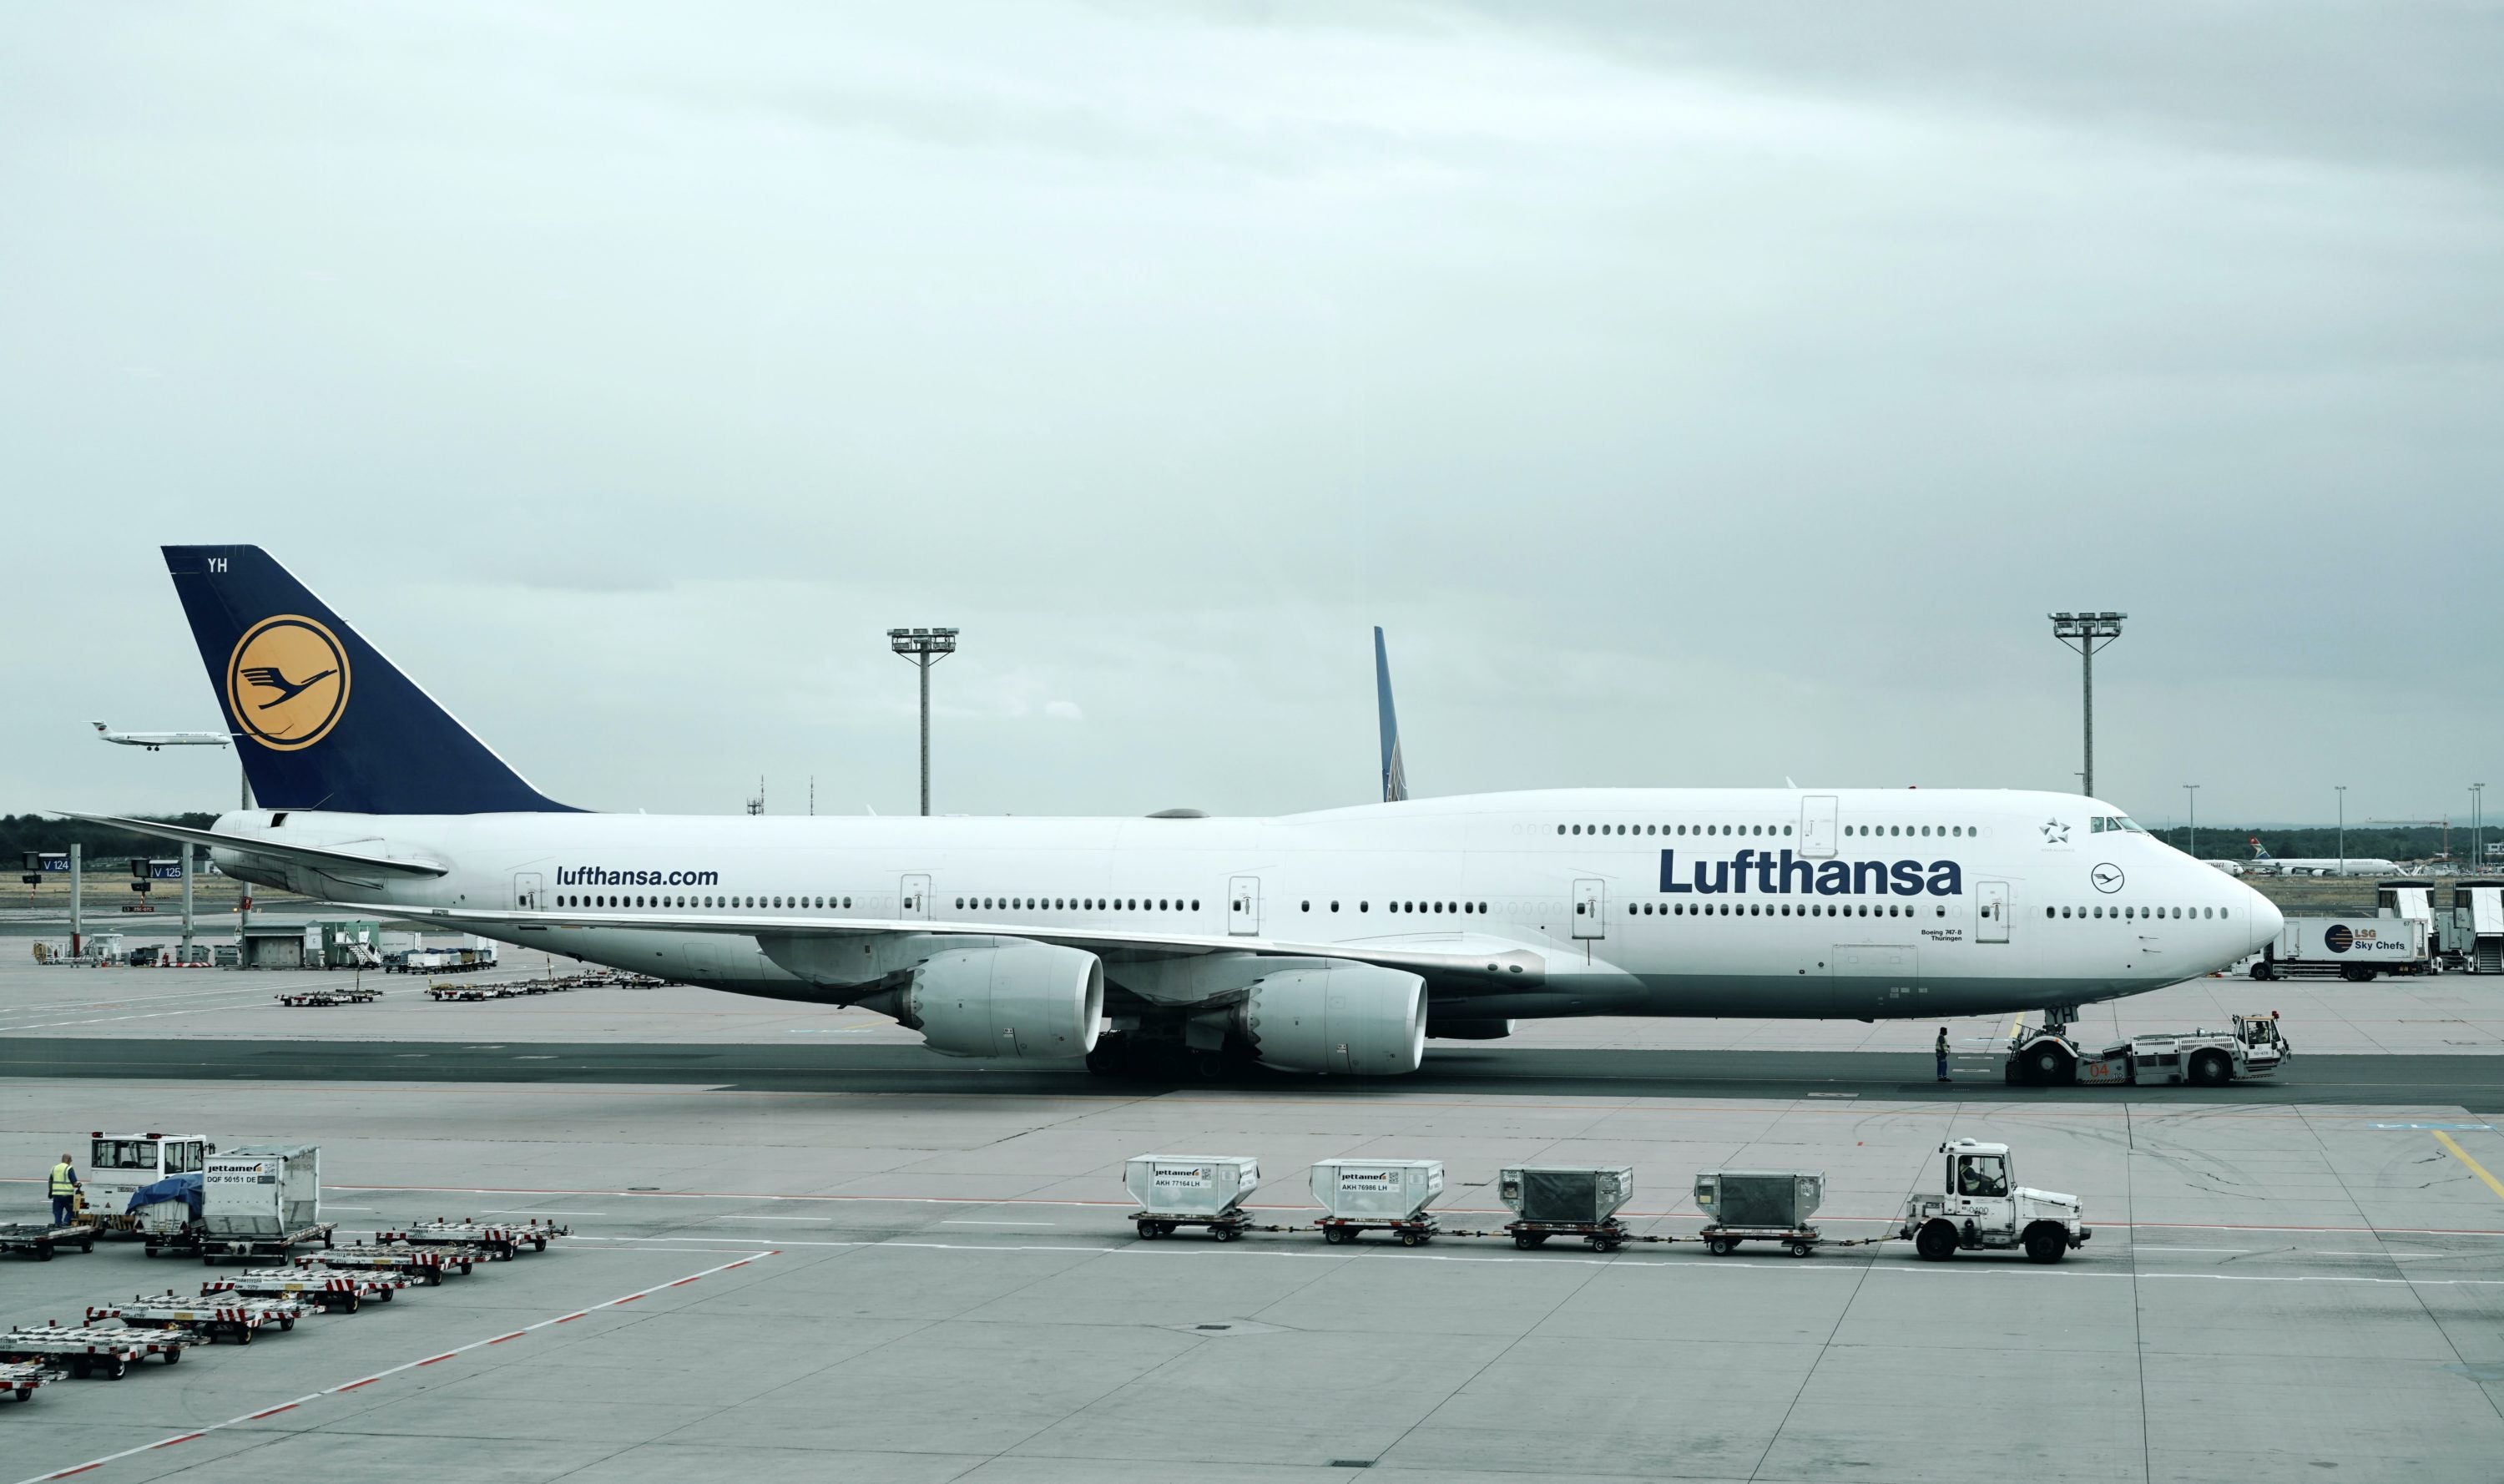 Free baggage rules at Lufthansa